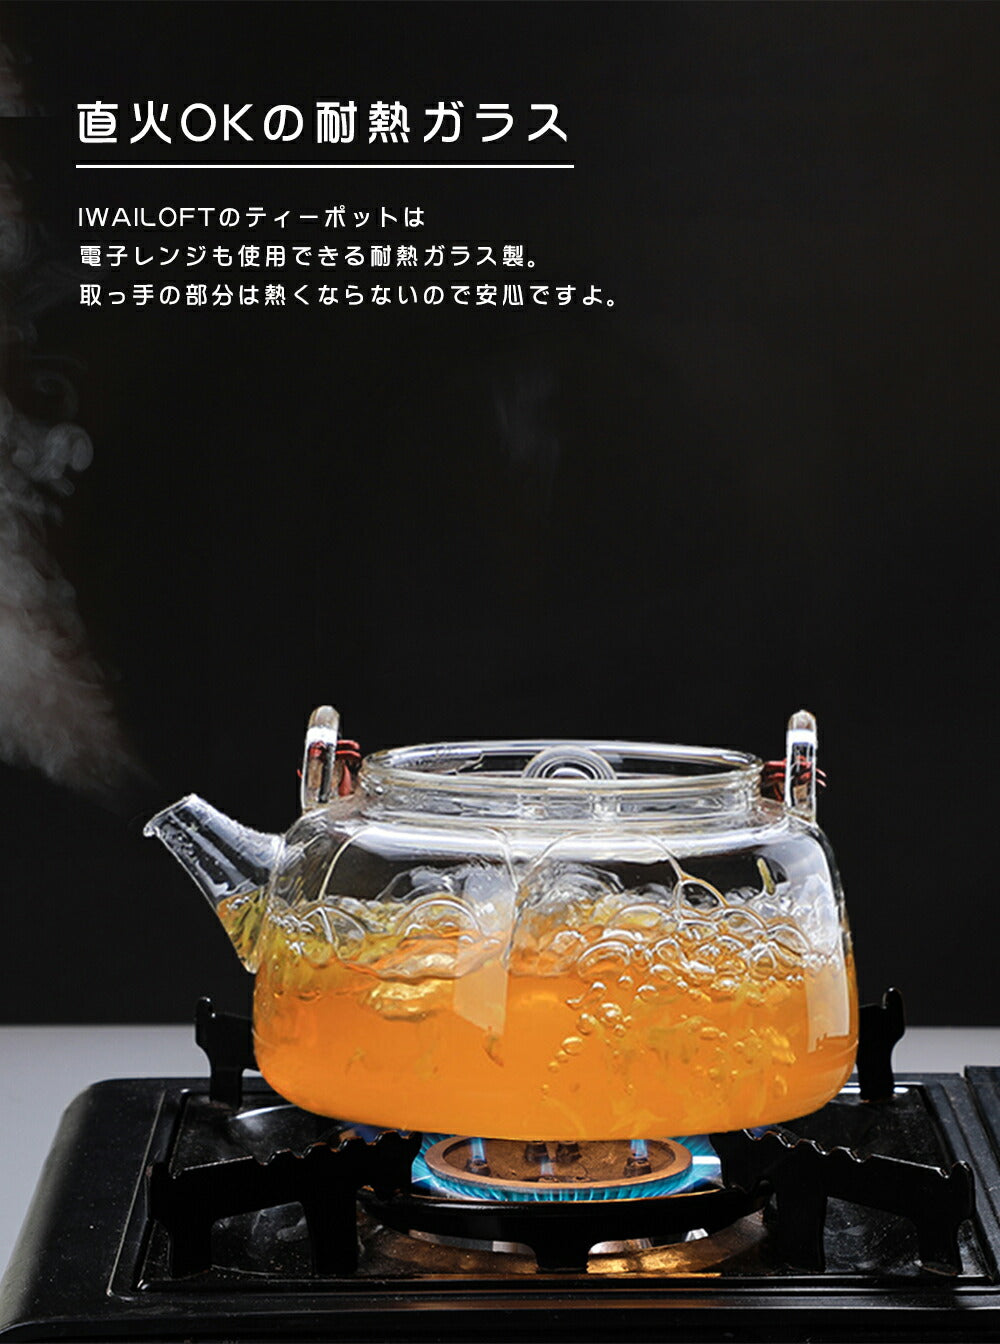 IwaiLoft Handmade Heat Resistant Glass Teapot with Tea Strainer Glass Pot Wooden Bamboo Handle Jumping Tea Pot Fruit Tea Leaf Tea Flower Tea Craft Tea Half Tea Direct Fireable Large Capacity IL-G1968 (Flat Round, 500mL-1000mL)